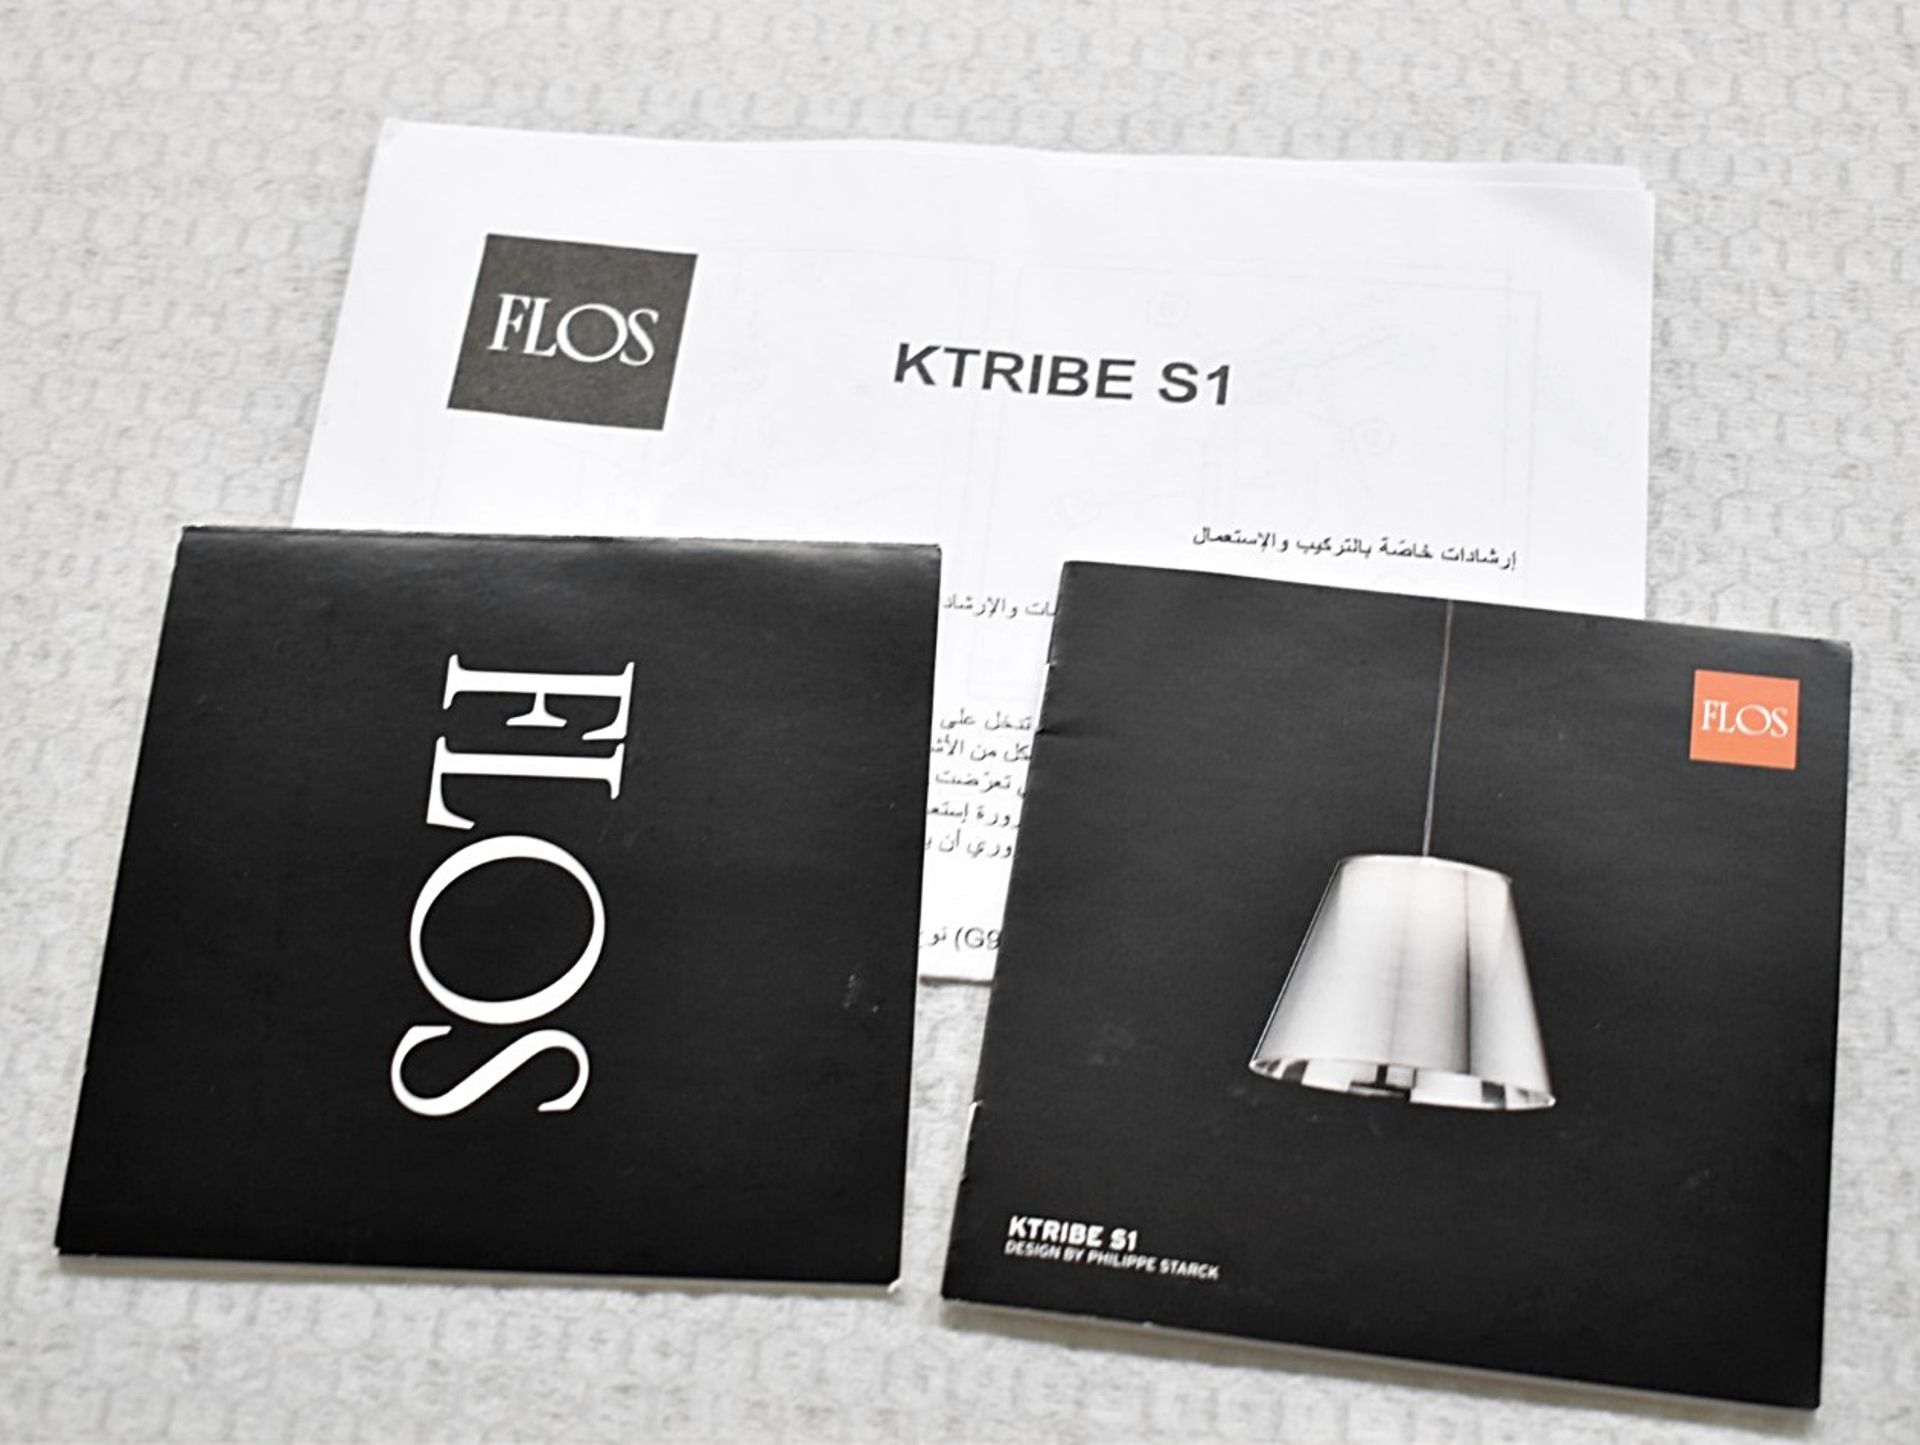 1 x FLOS / PHILIPPE STARCK 'Ktribe S' Designer Suspension Light (Smoke) - Original RRP £280.00 - Image 5 of 5